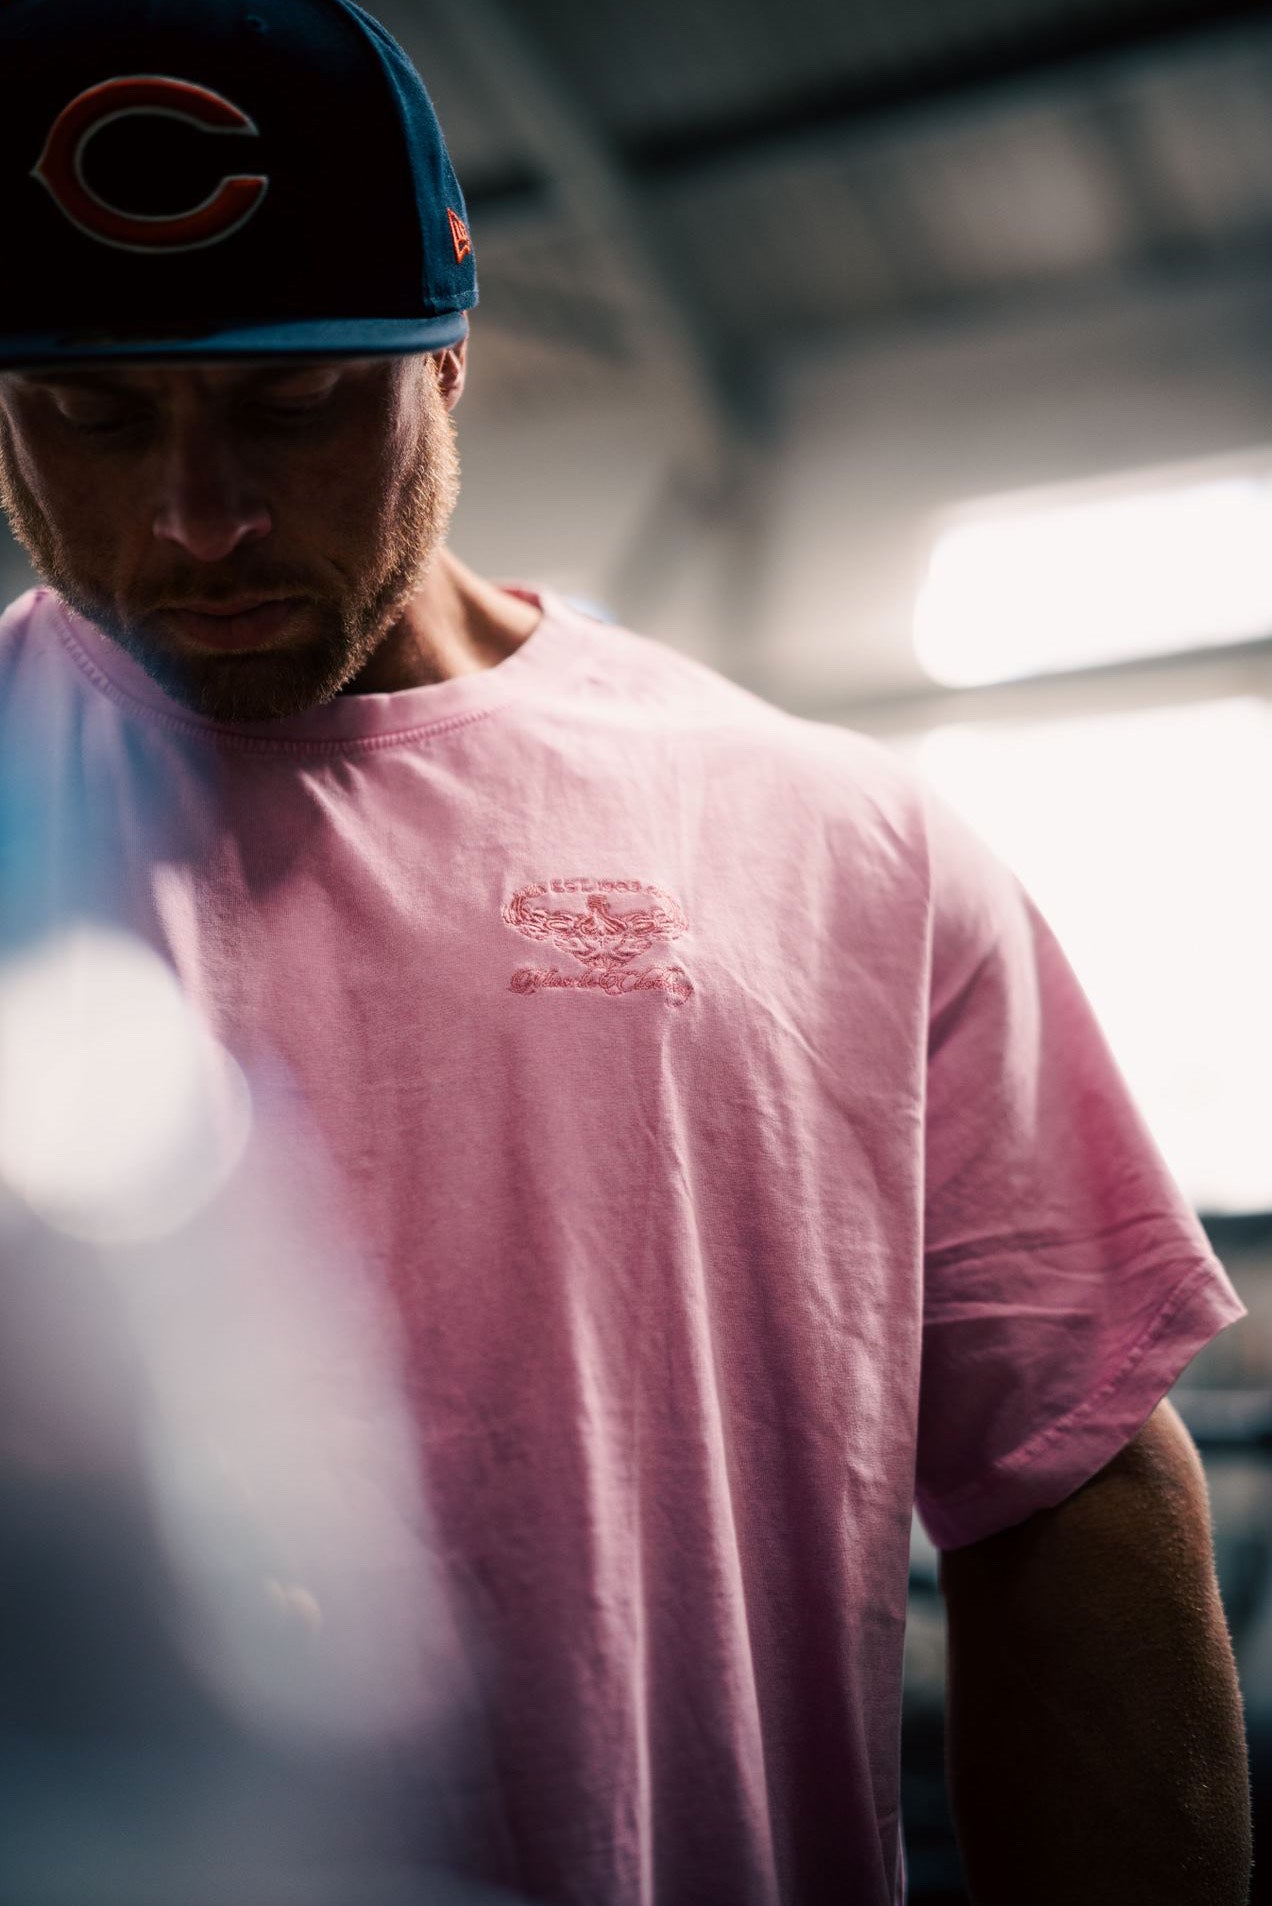 MENS - "Embroidered profile" Supersized T Shirt - Acid washed Soft Pink